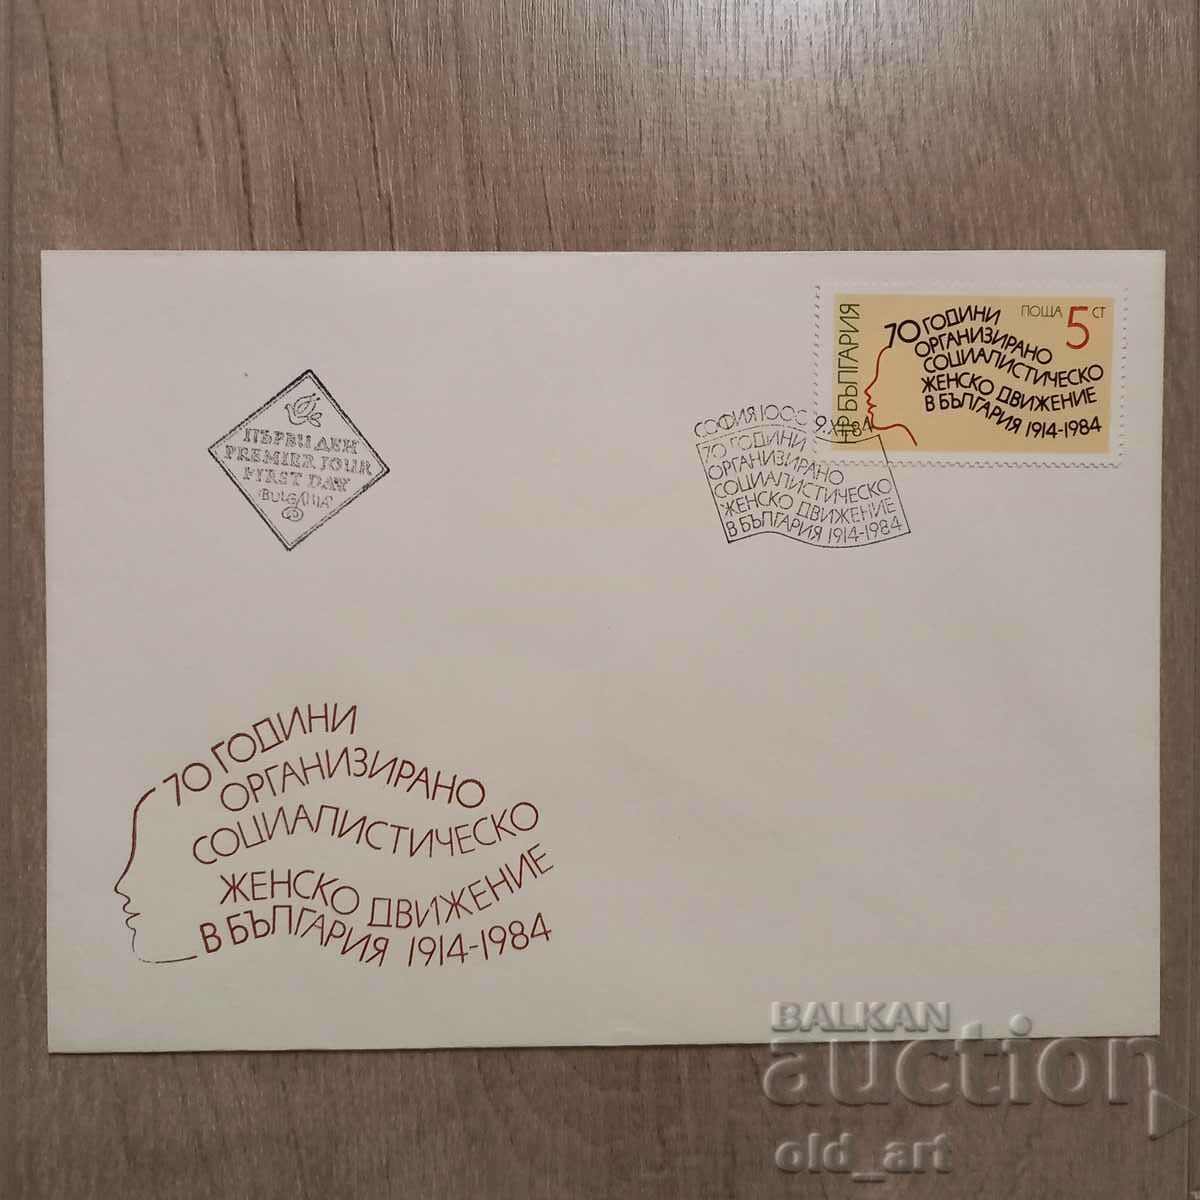 Postal envelope - 70 years org. social women's movement in Bulgaria